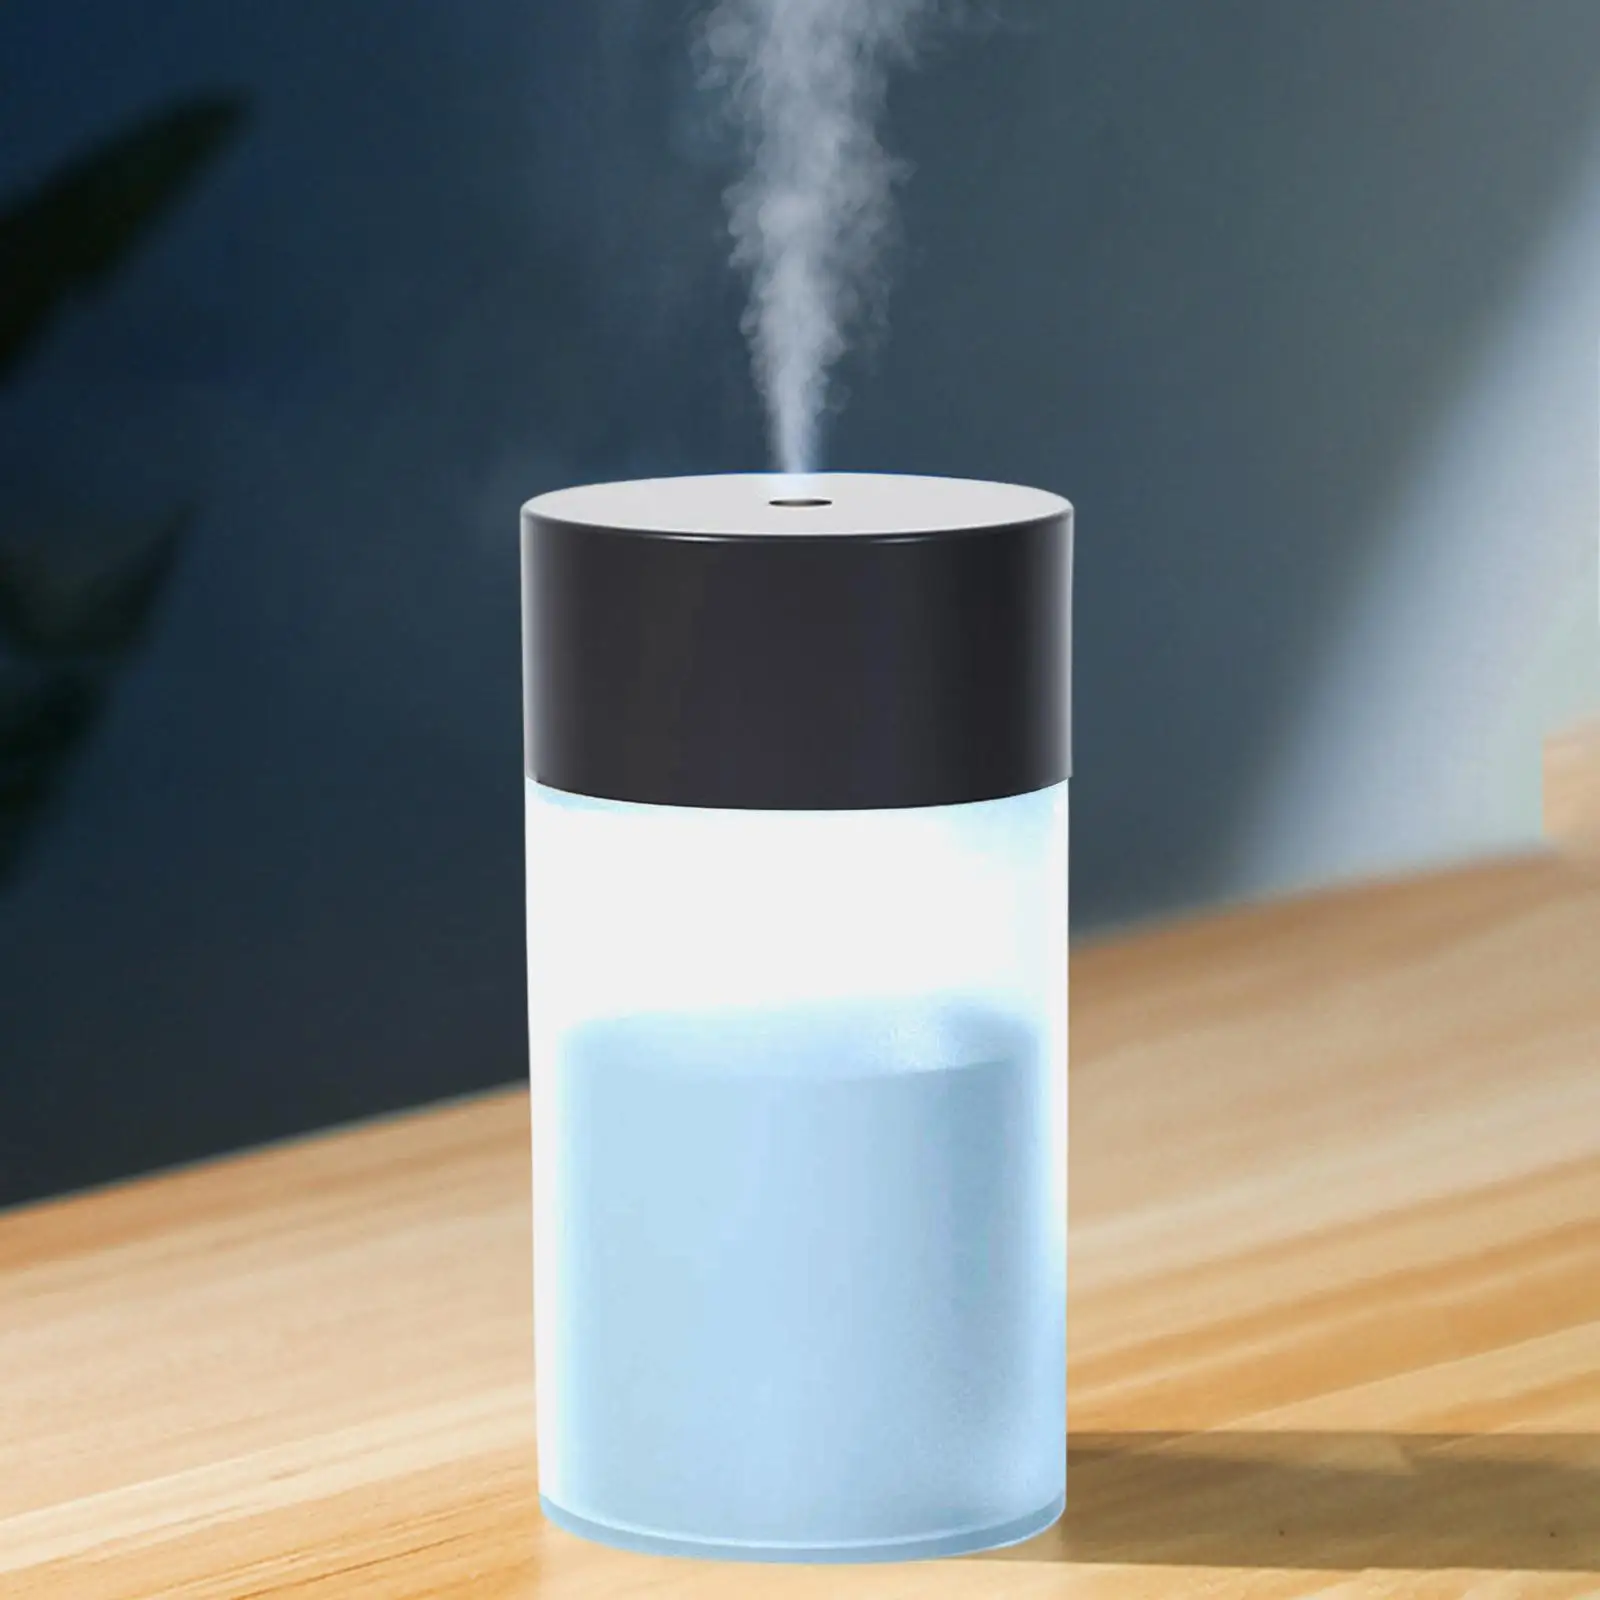 260ml Portable USB Air Humidifier Cool Mist Essential Night Light for Car 2 Mist Modes Auto Off Moisturizing Skin